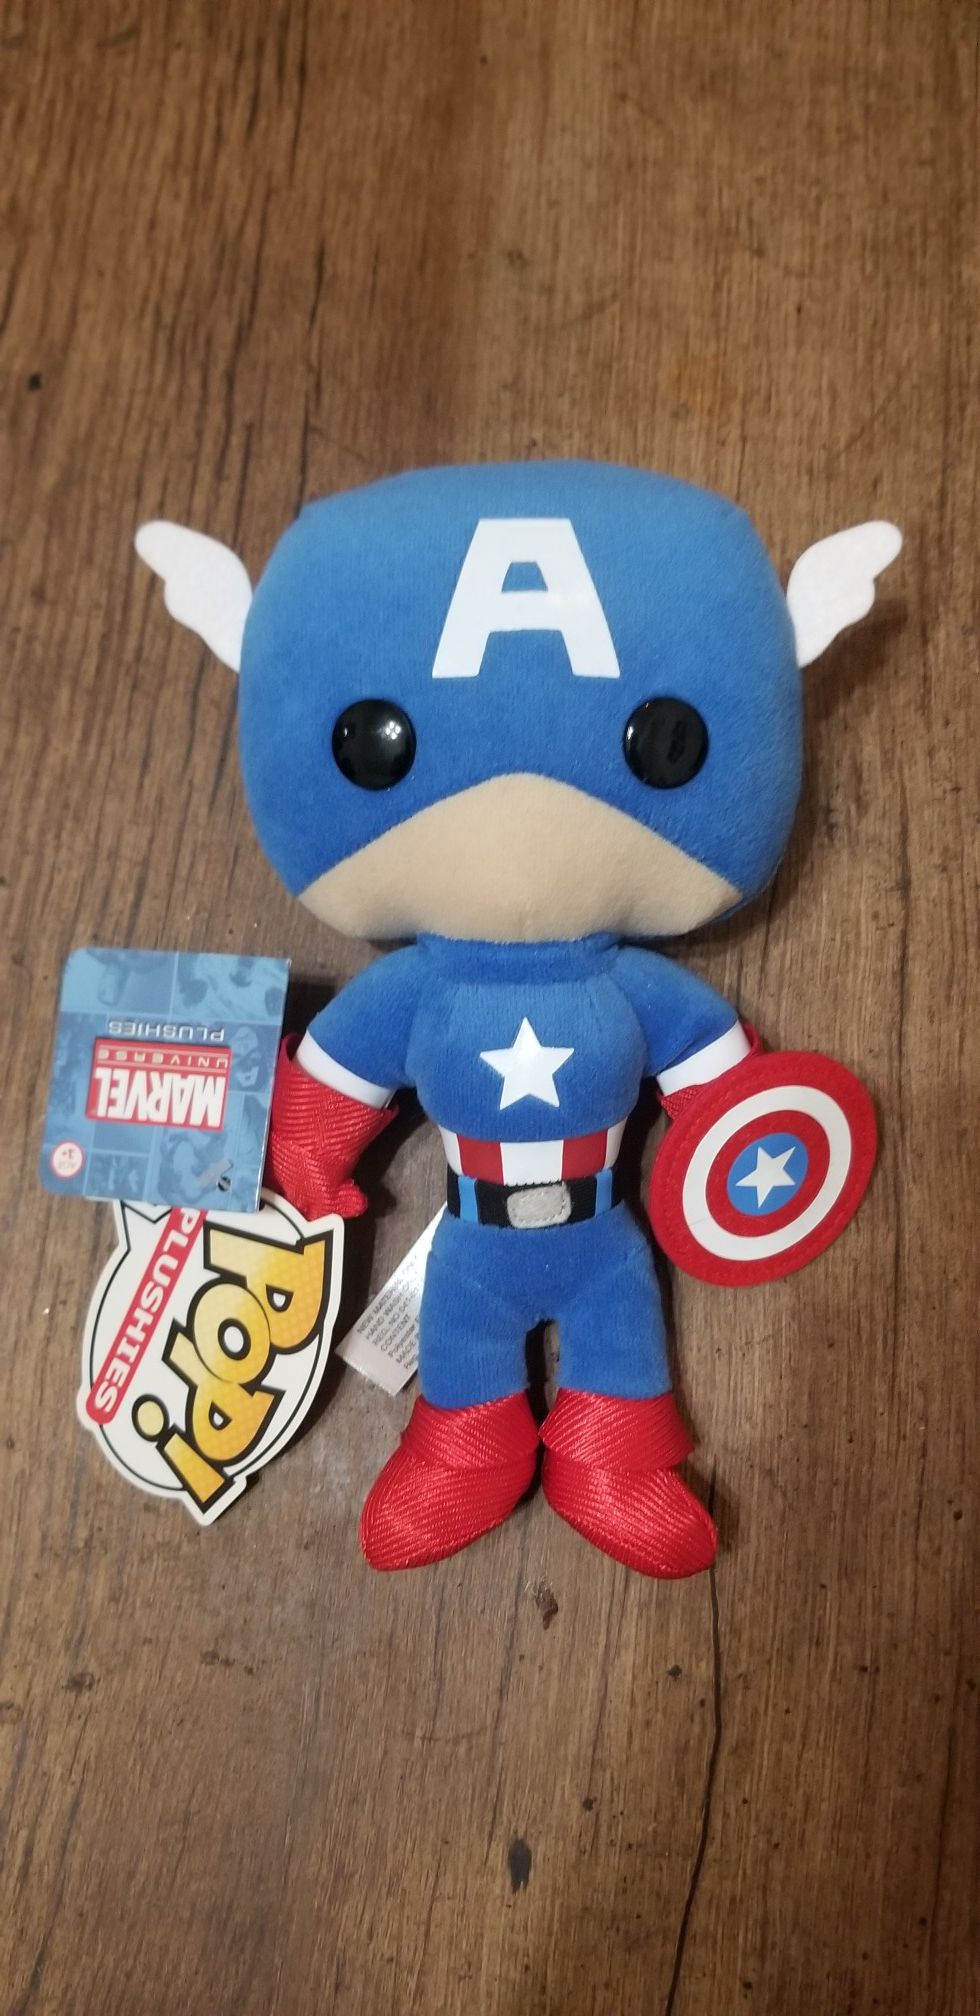 Captain America pop plushies